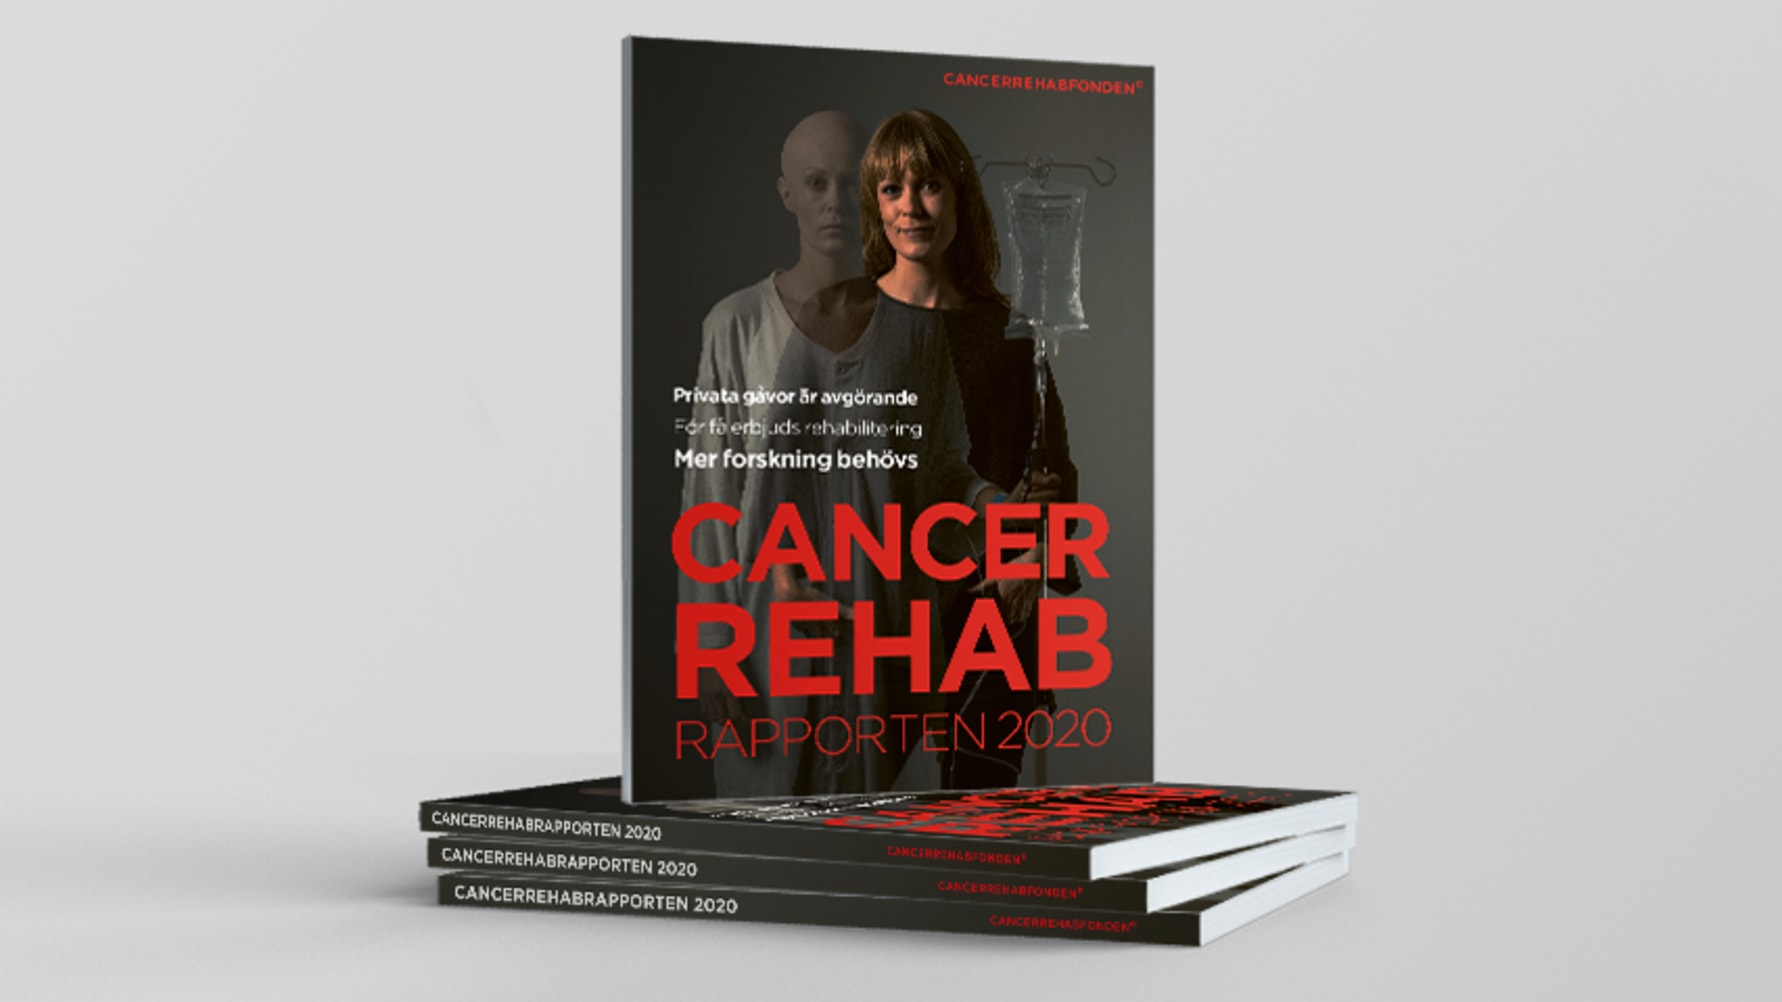 CancerRehabRapporten 2020: ”Rehabiliteringsskuld” efter corona-våren